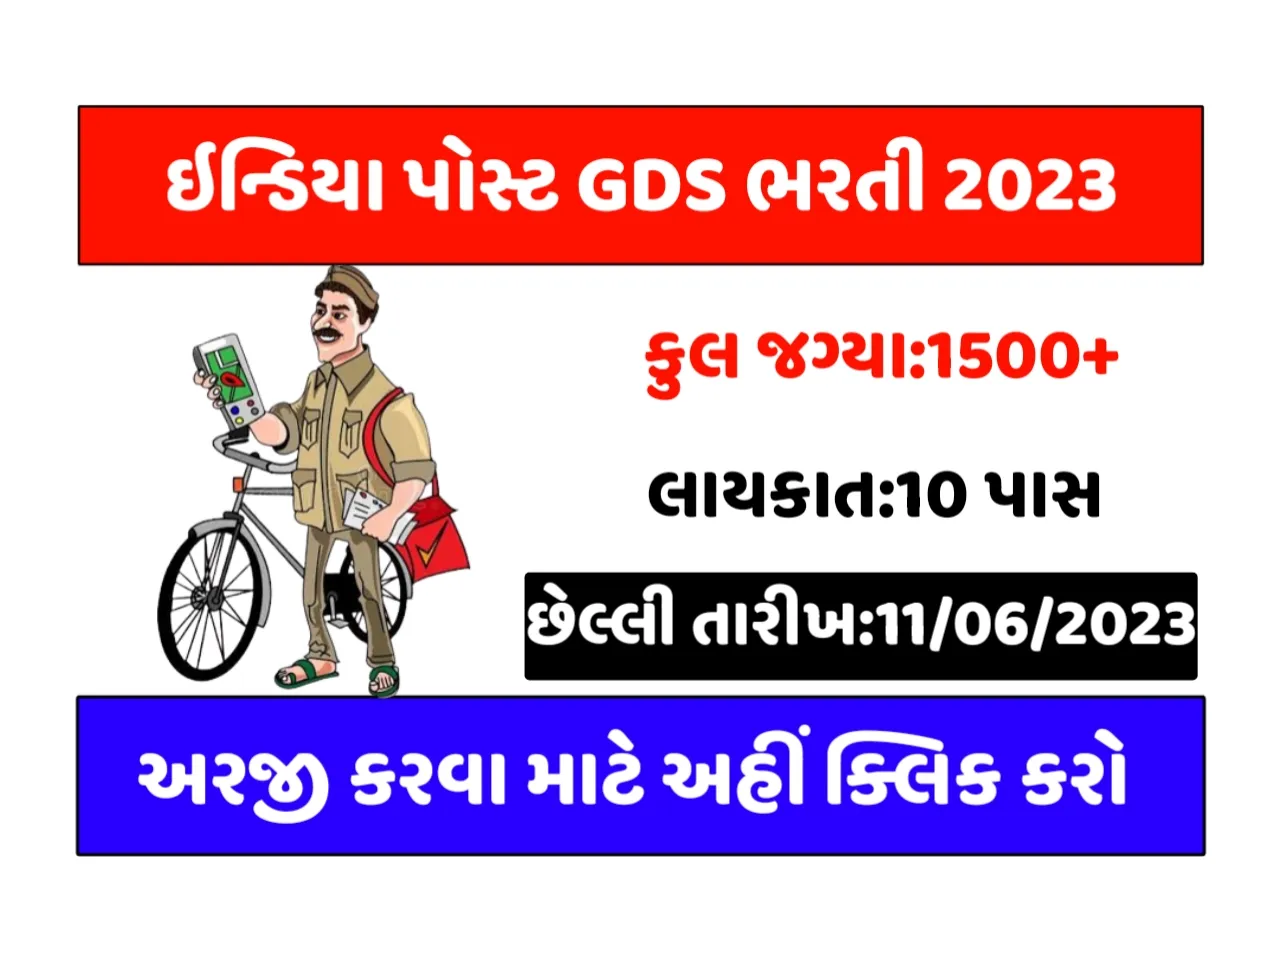 GDS Recruitment 2023: ભારતીય ગ્રામીણ ડાક સેવક ભરતી કુલ 1500 થી વધુ જગ્યાઓ, જુઓ સંપૂર્ણ માહિતી